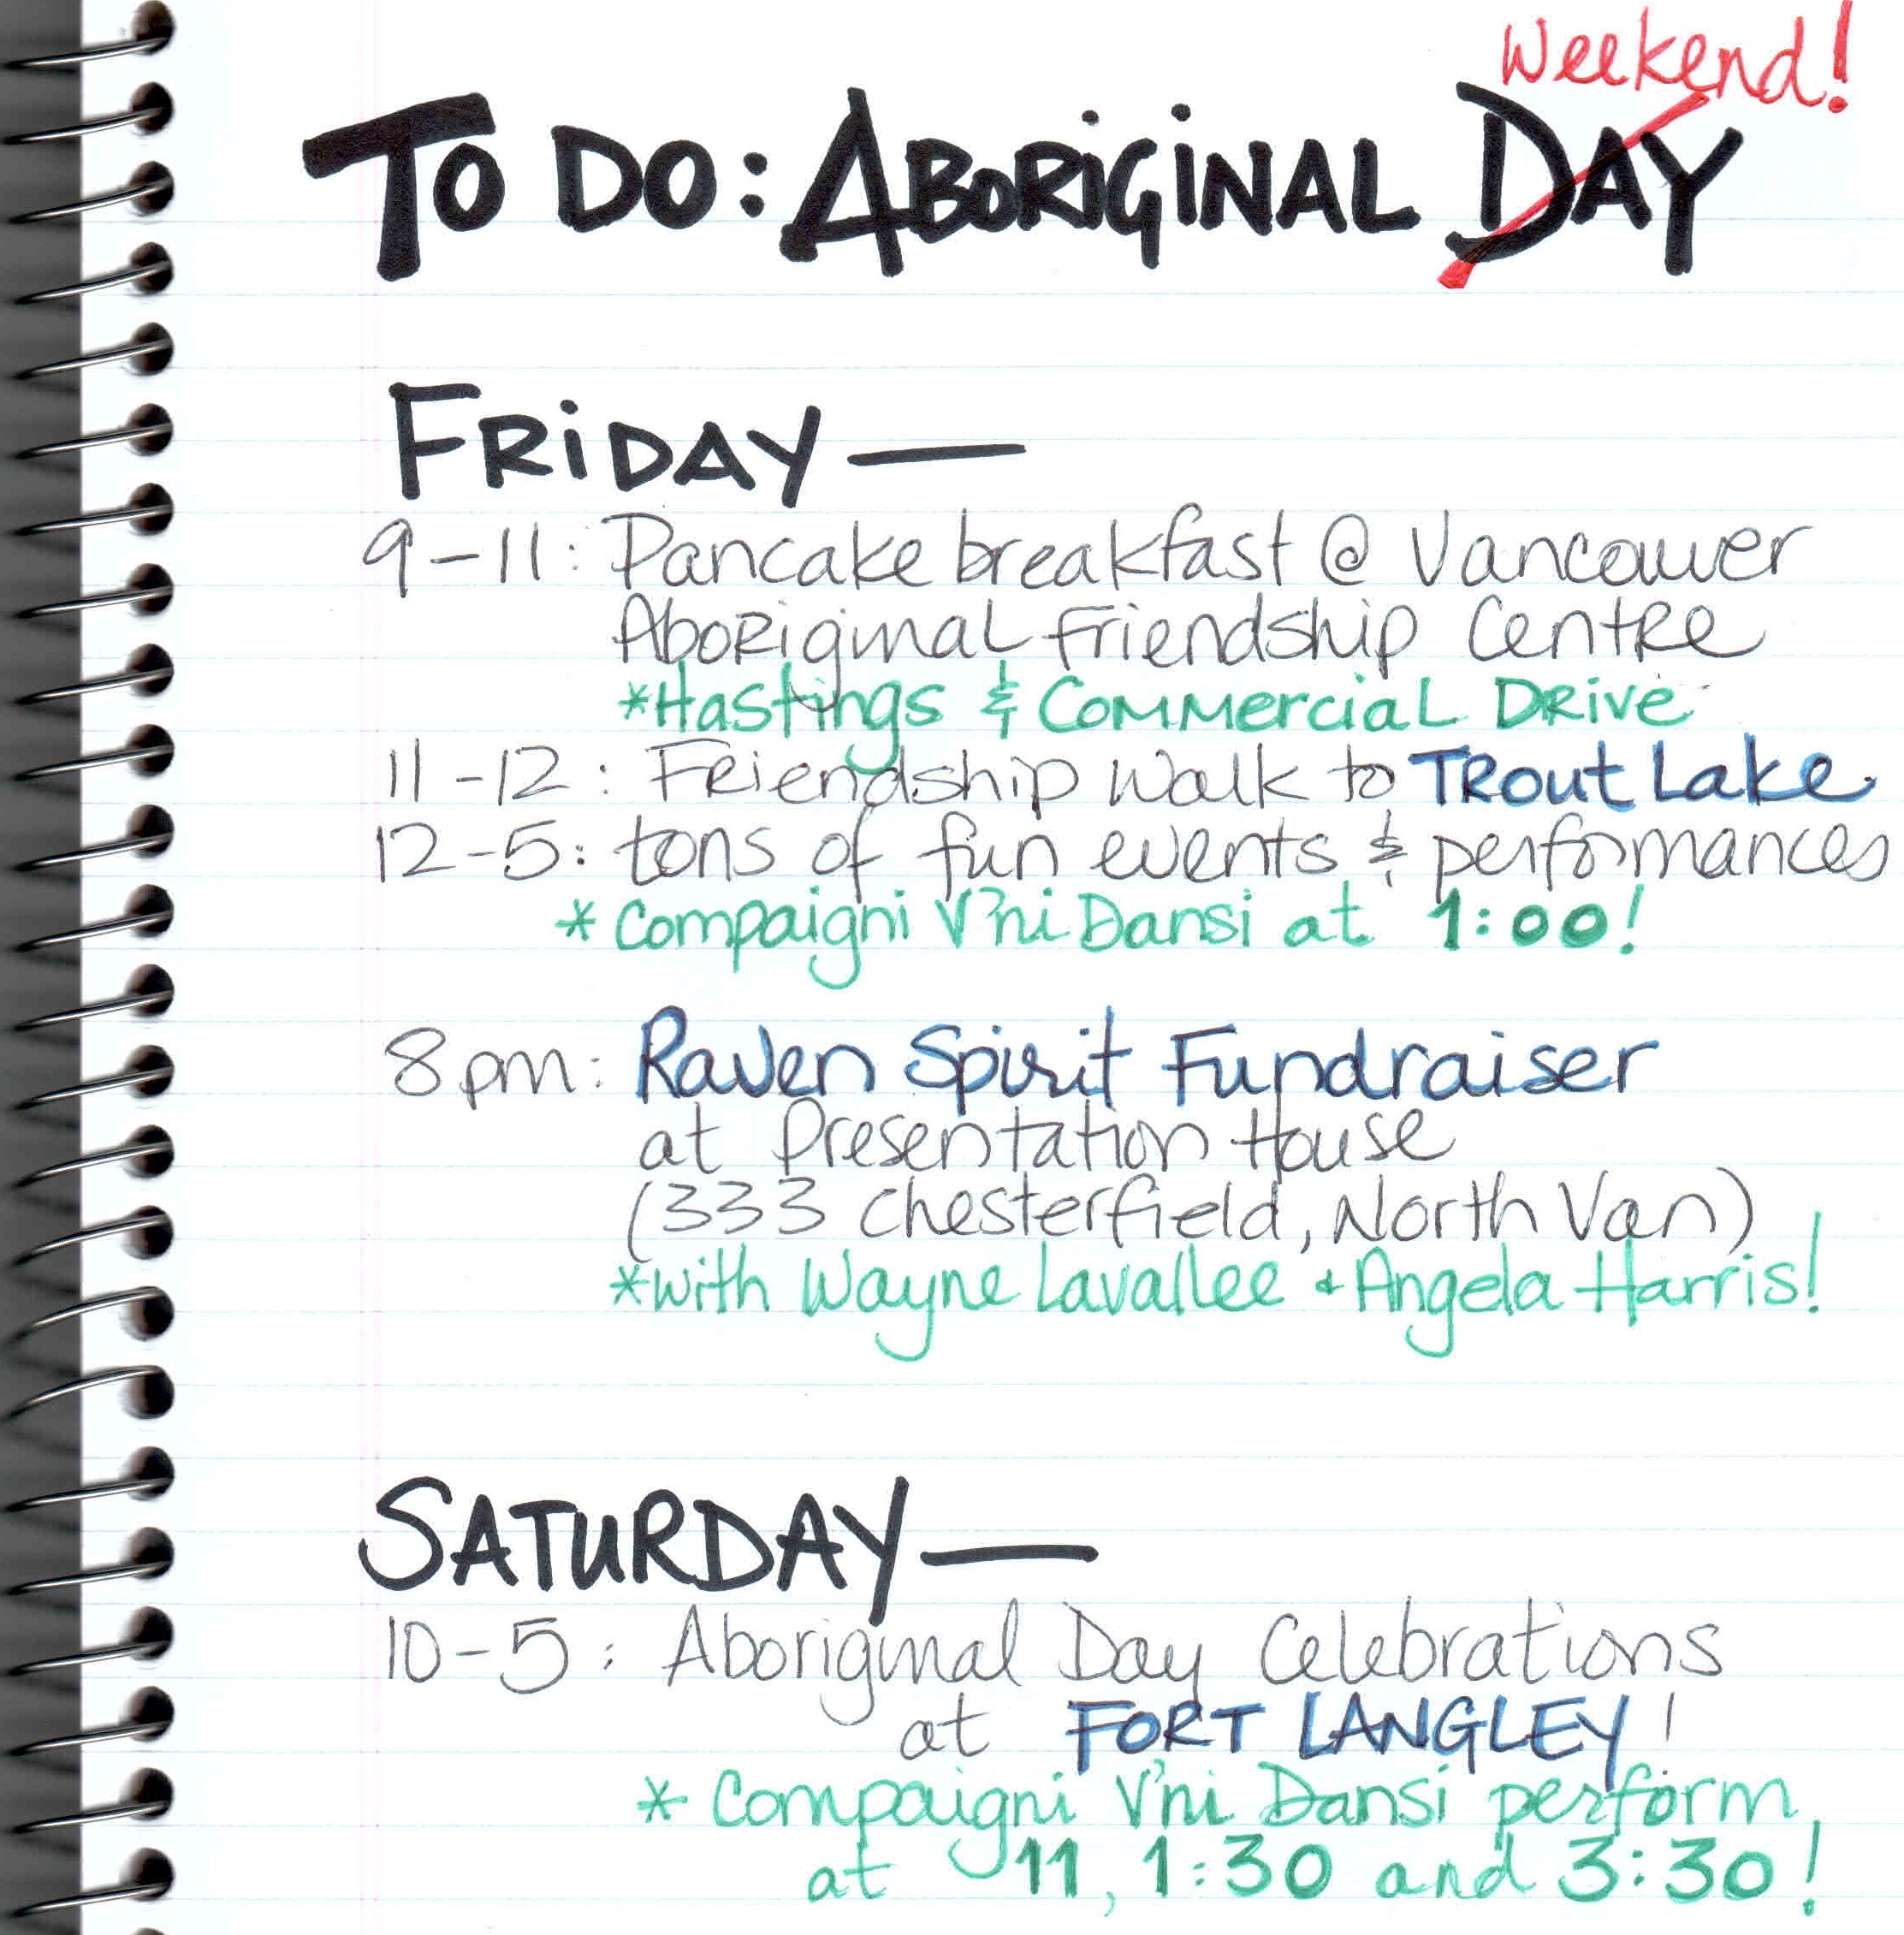 Aboriginal Weekend!